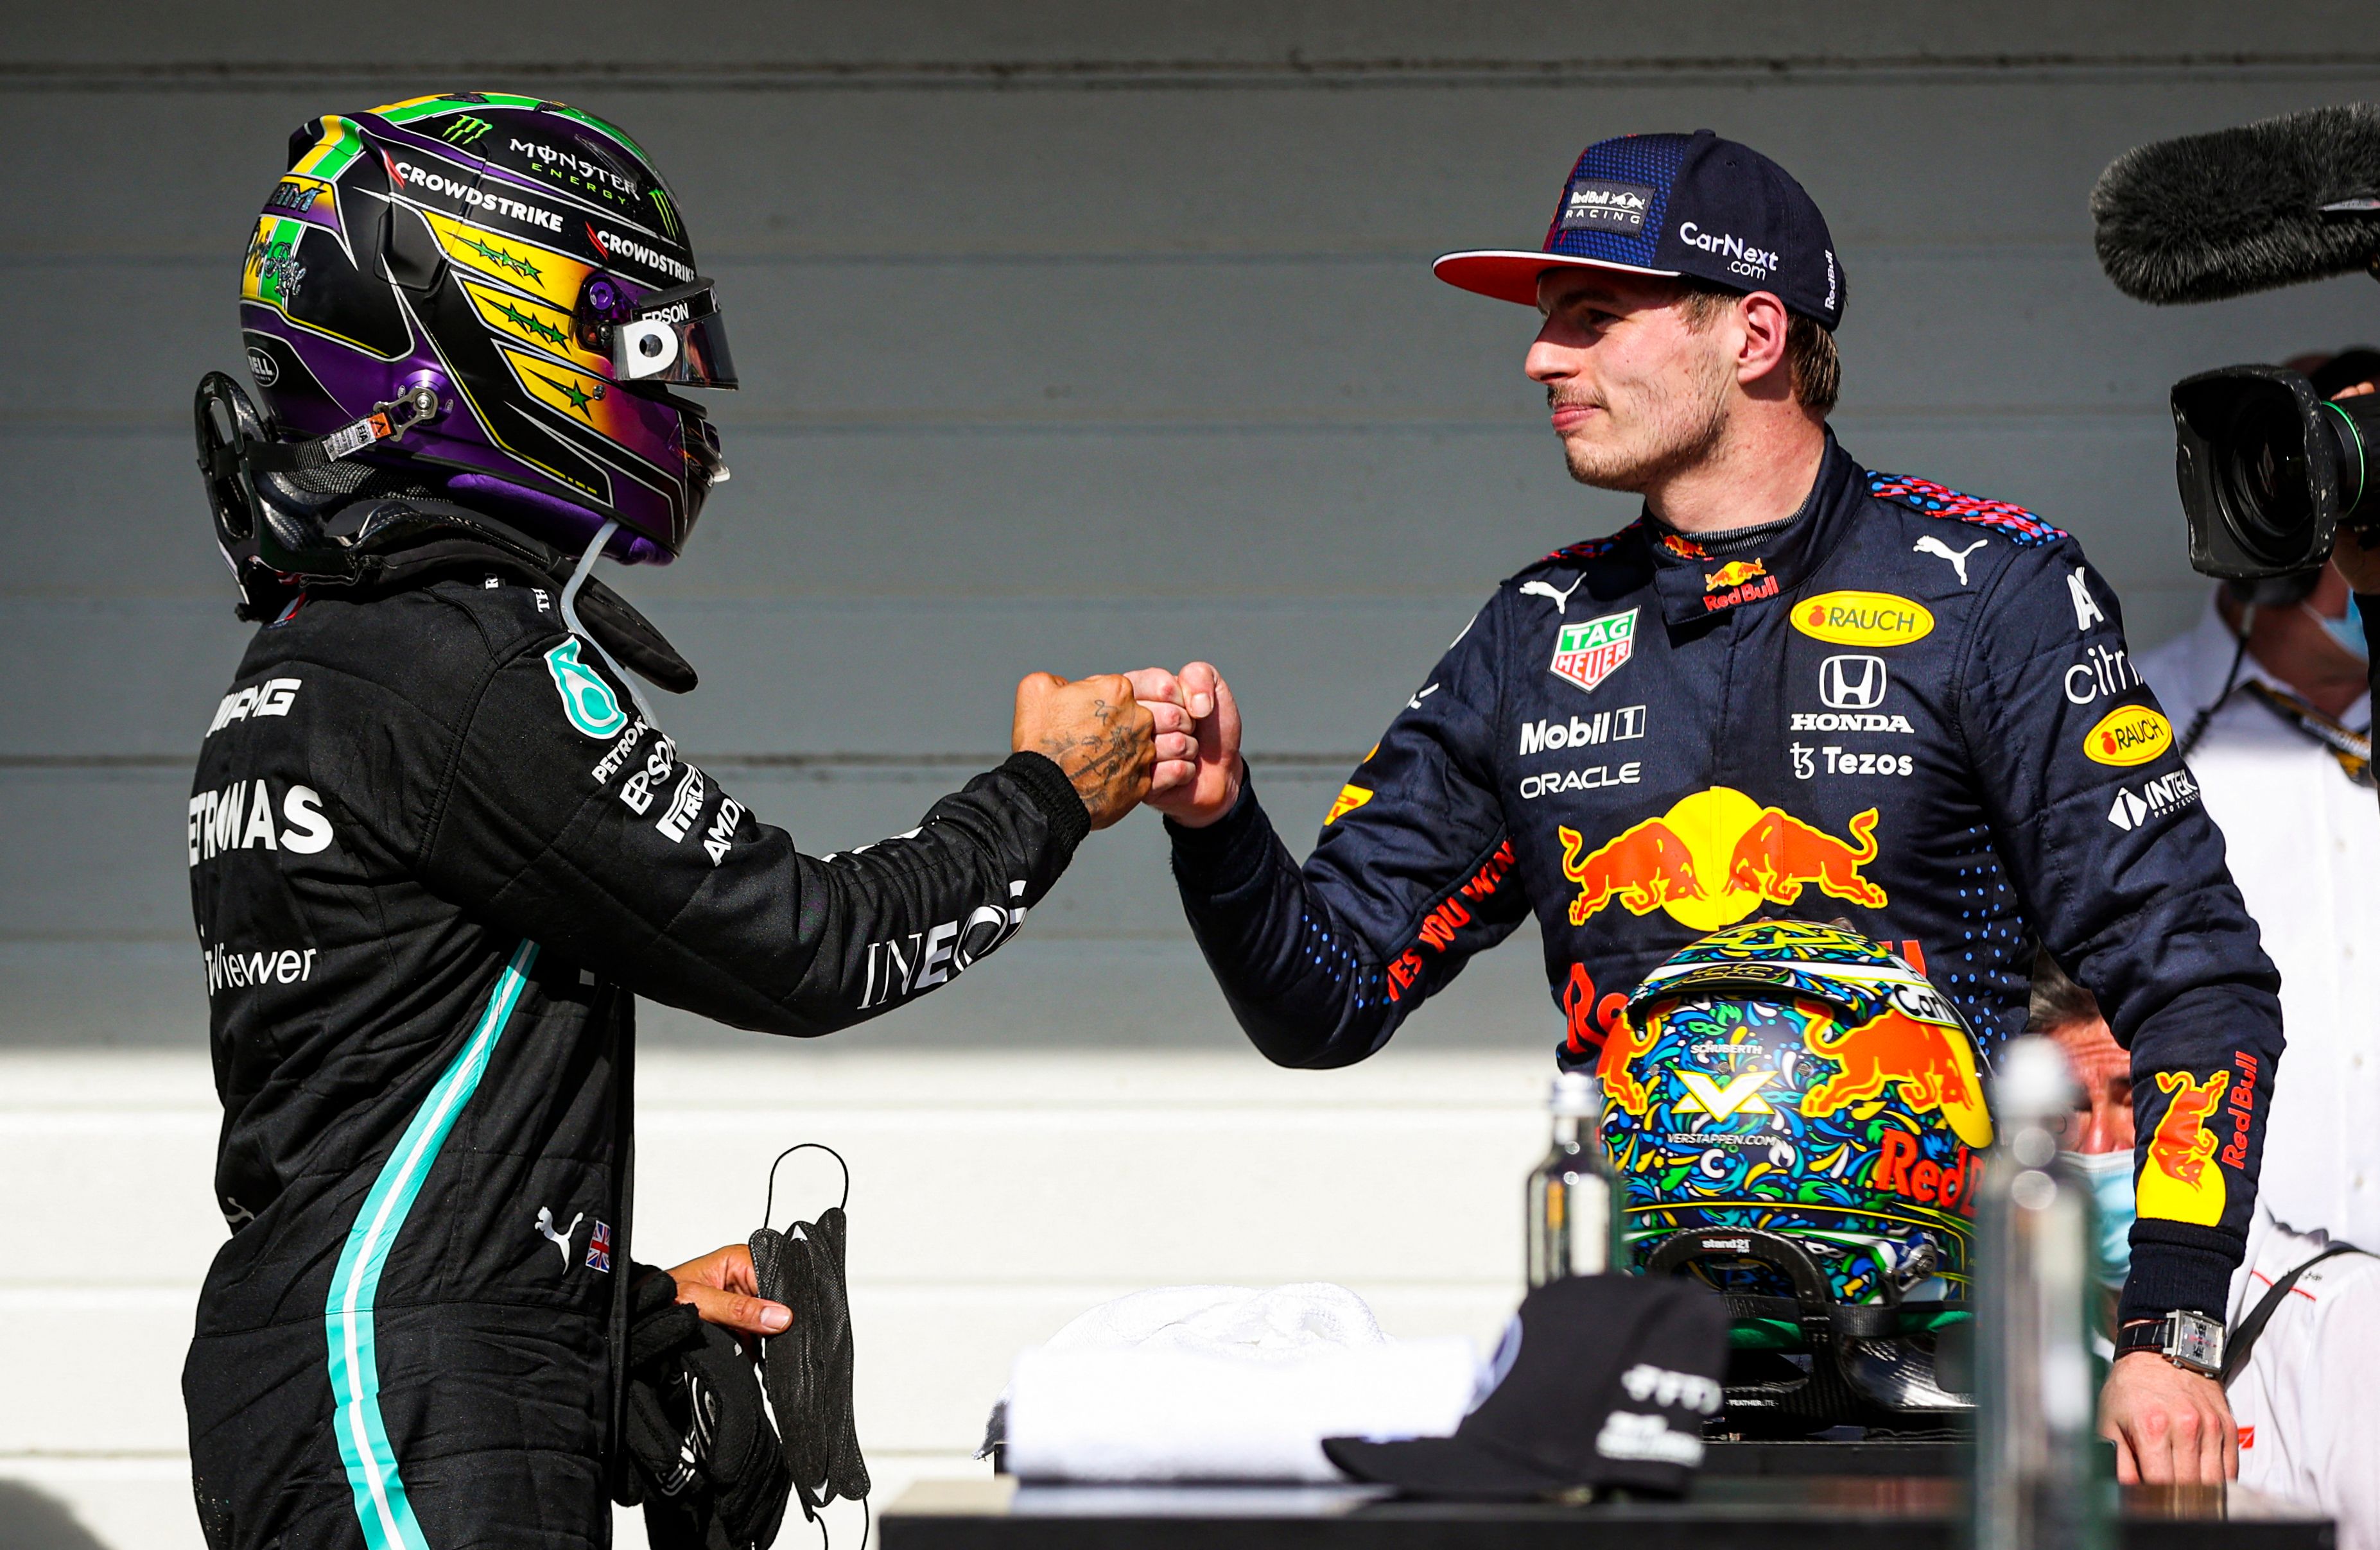 Max Verstappen congratulates Lewis Hamilton after their dramatic duel at Interlagos